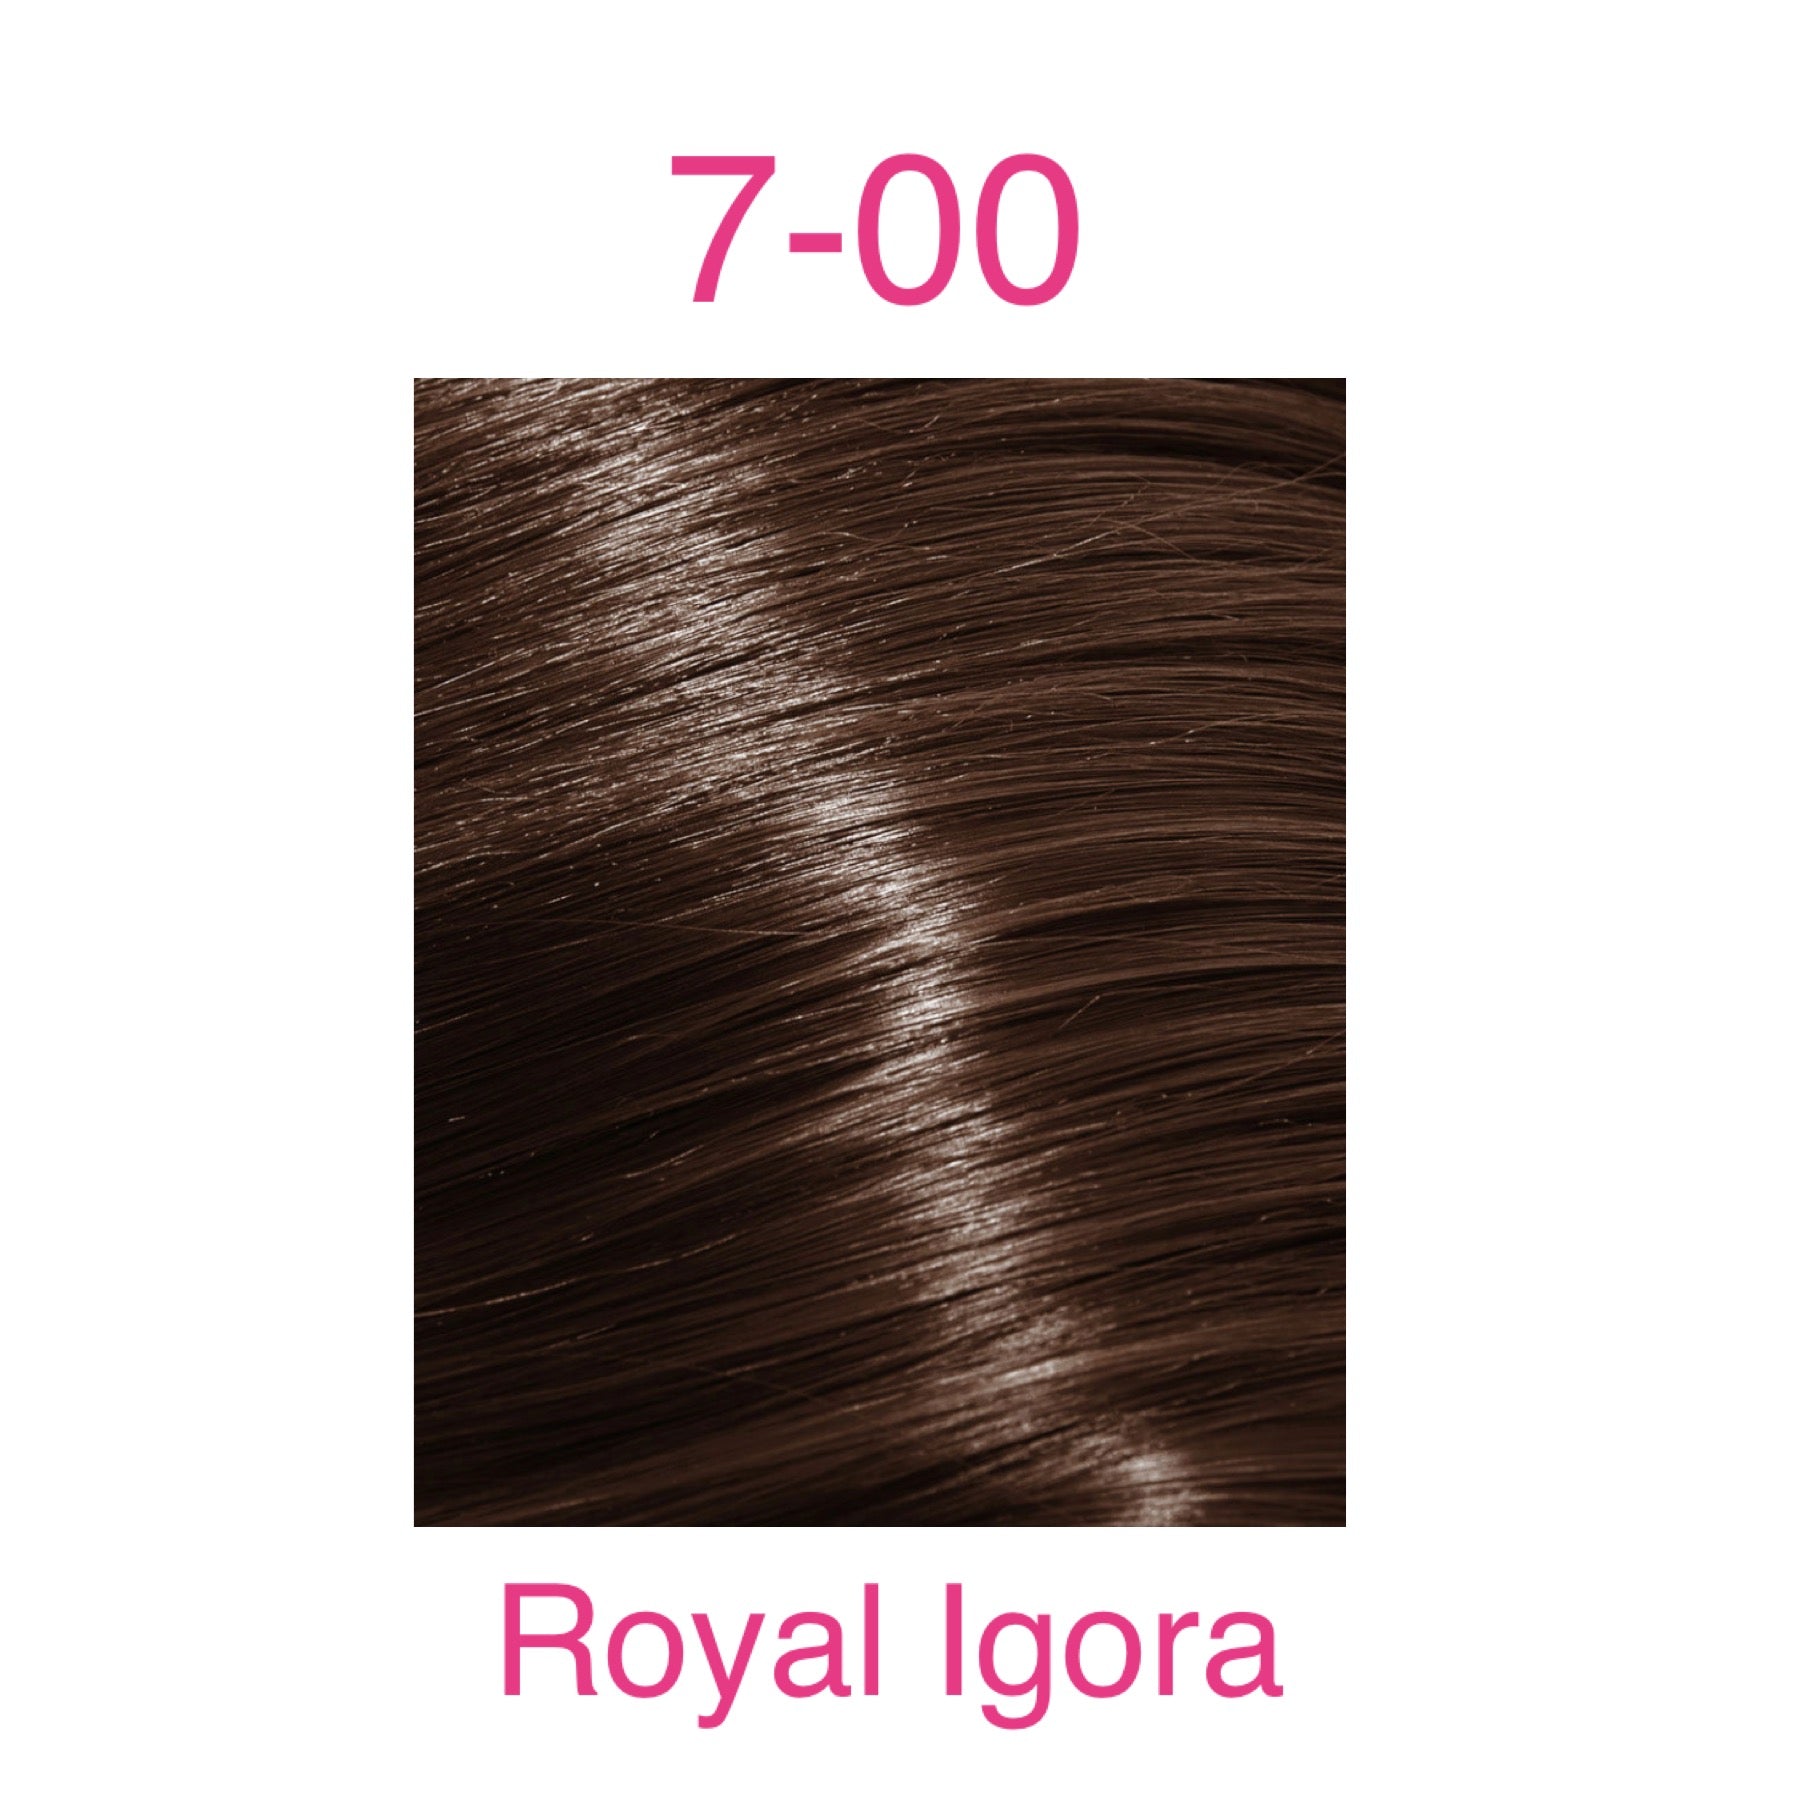 Schwarzkopf Igora Royal Permanent Hair Color 7-76 Medium Blonde Copper  Chocolate 60ml